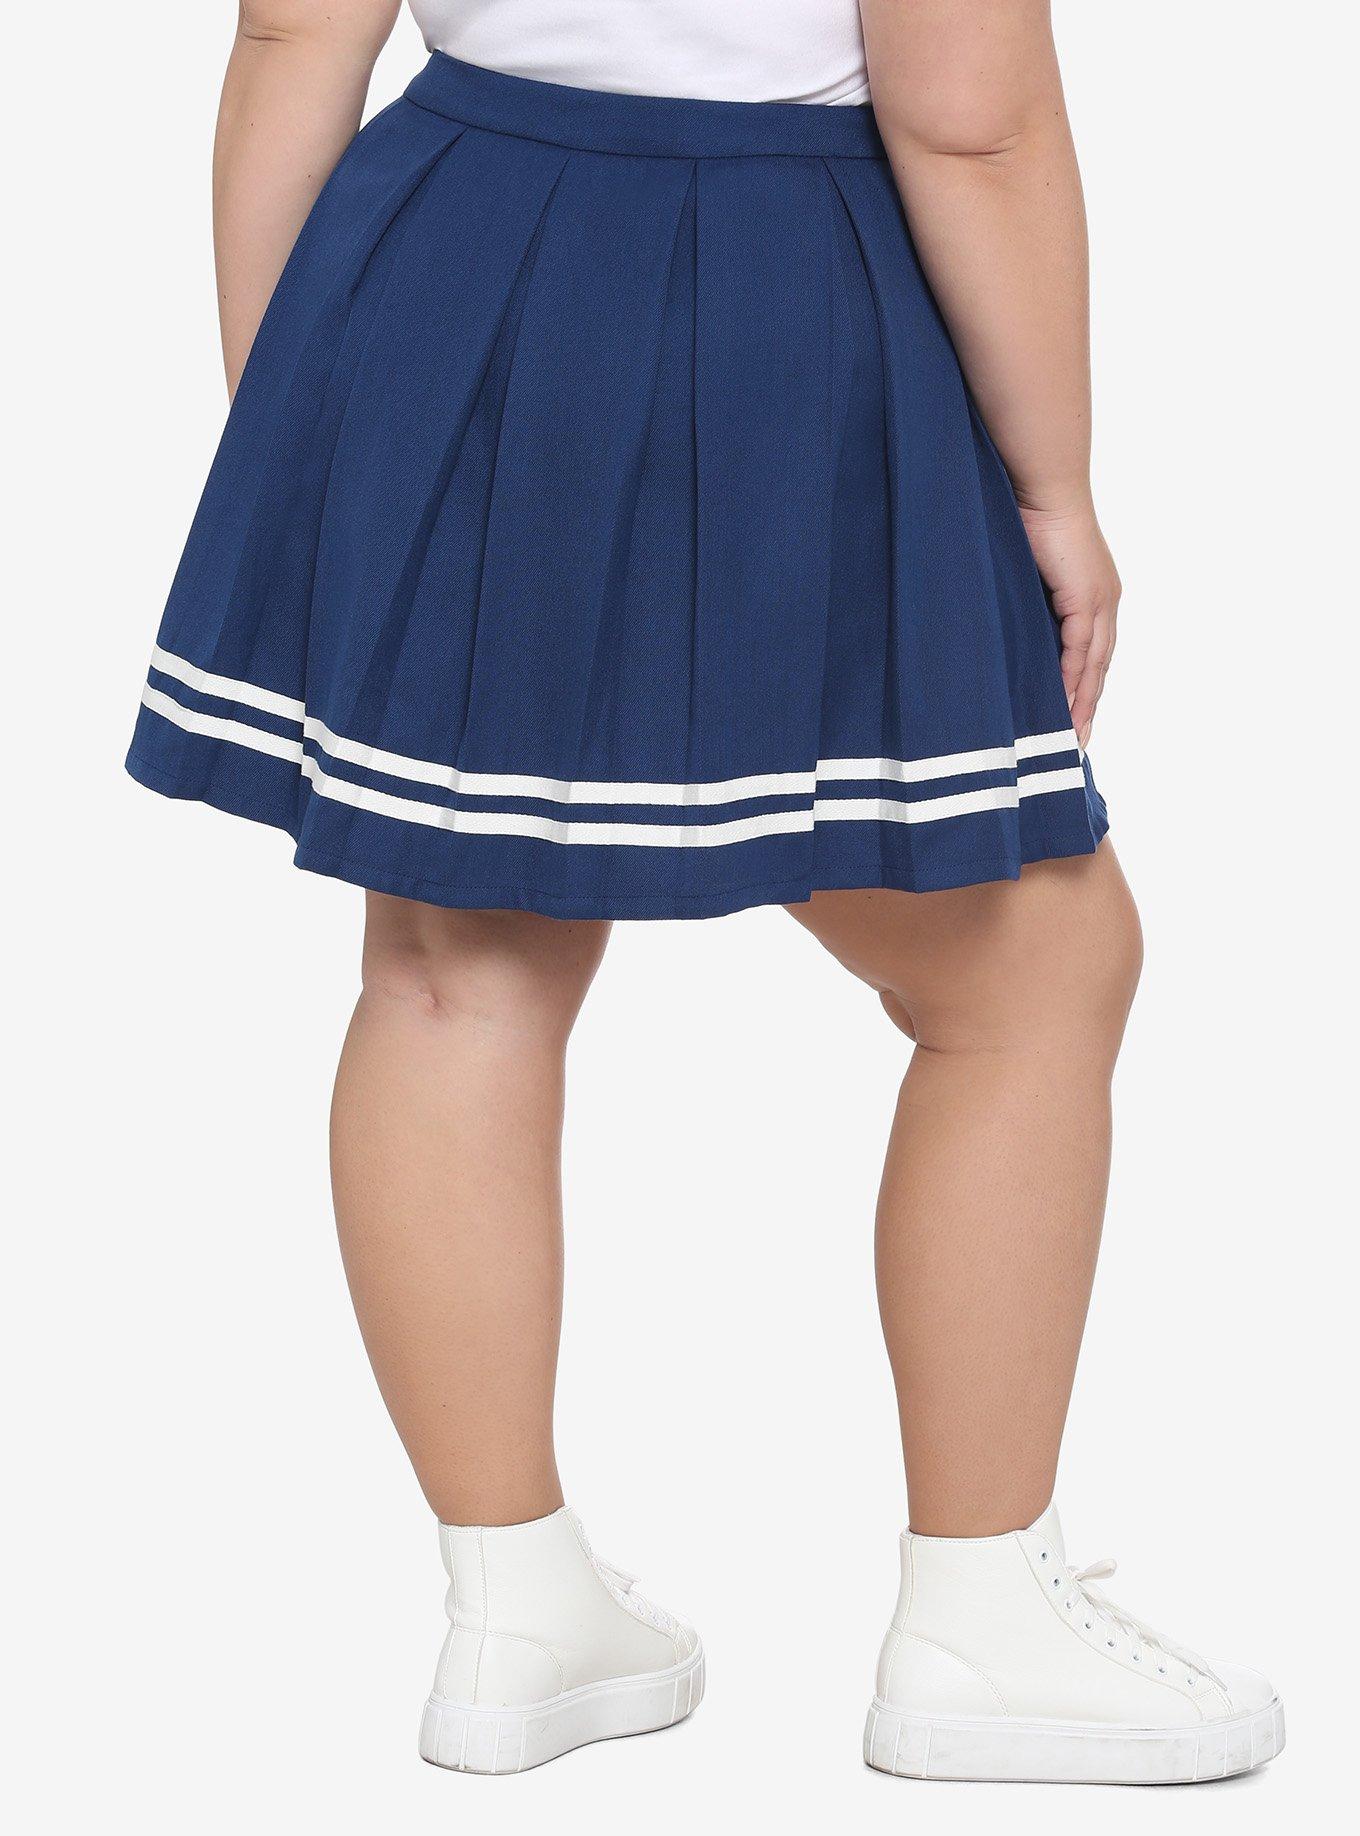 Navy Pleated Cheer Skirt Plus Size, NAVY, alternate